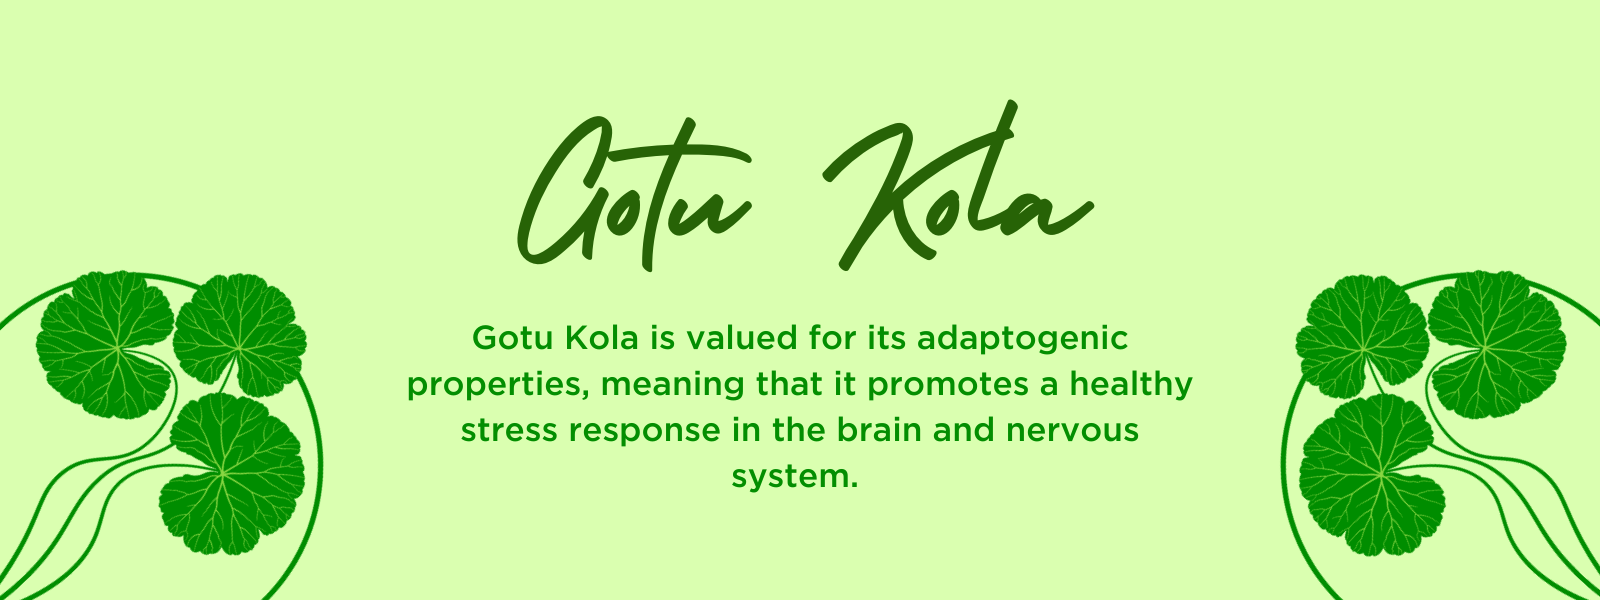 Gotu Kola - Health Benefits, Uses and Important Facts